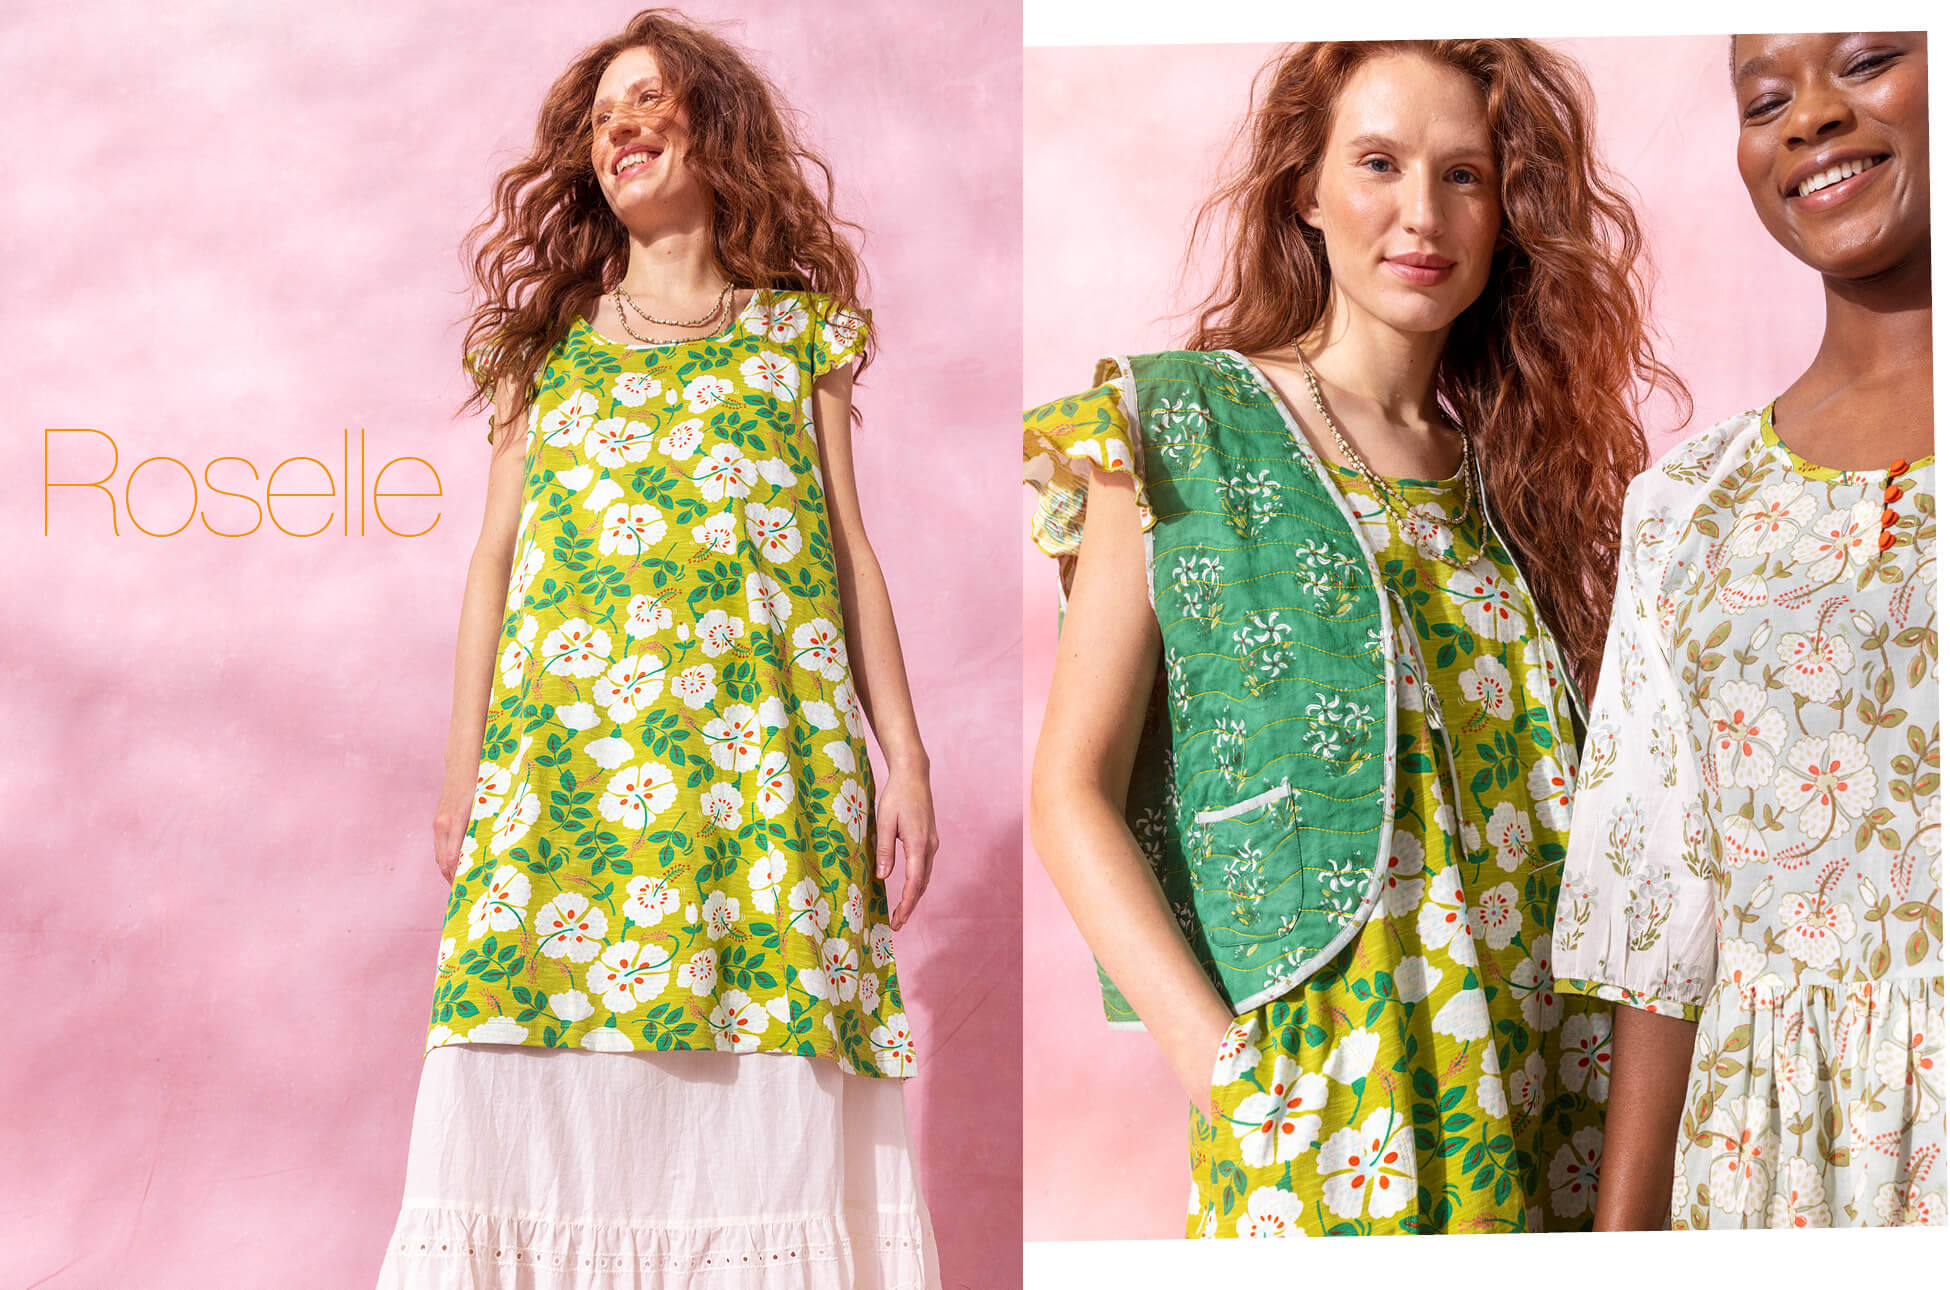 “Roselle” organic cotton jersey dress